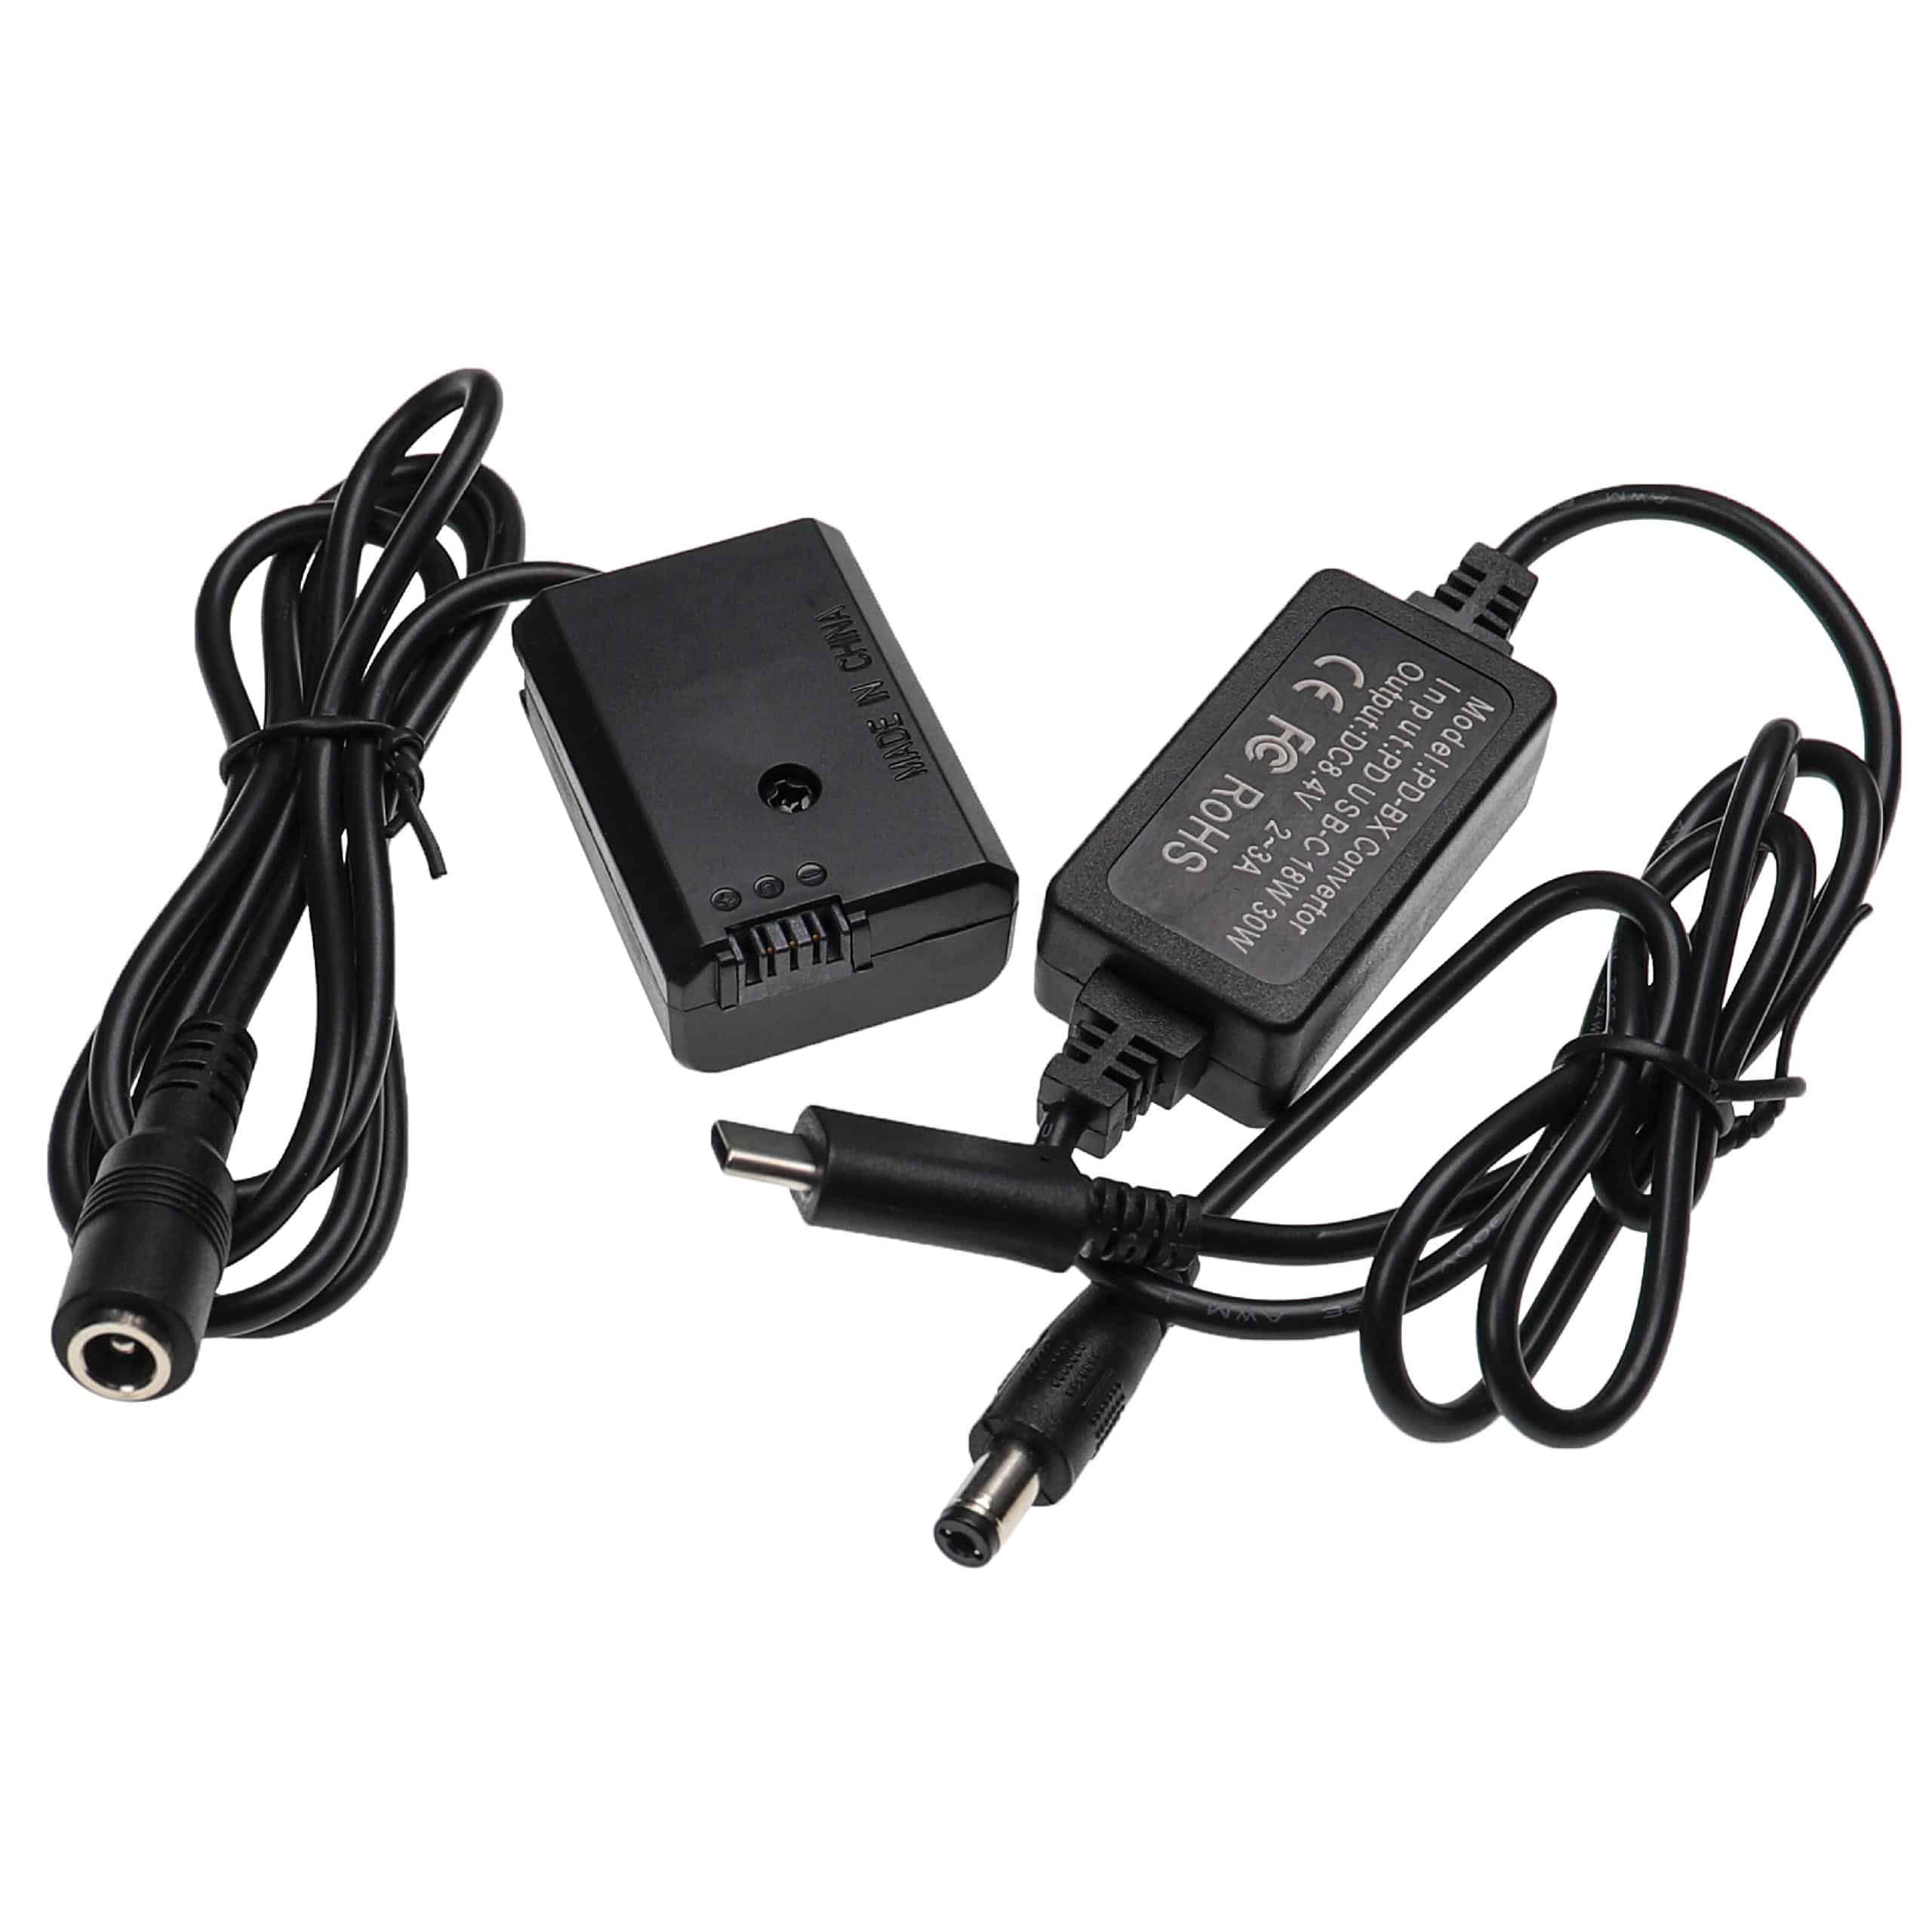 Alimentatore USB sostituisce Sony AC-PW20 per fotocamera Sony + coupler DC come Sony NP-FW50, 3,0A